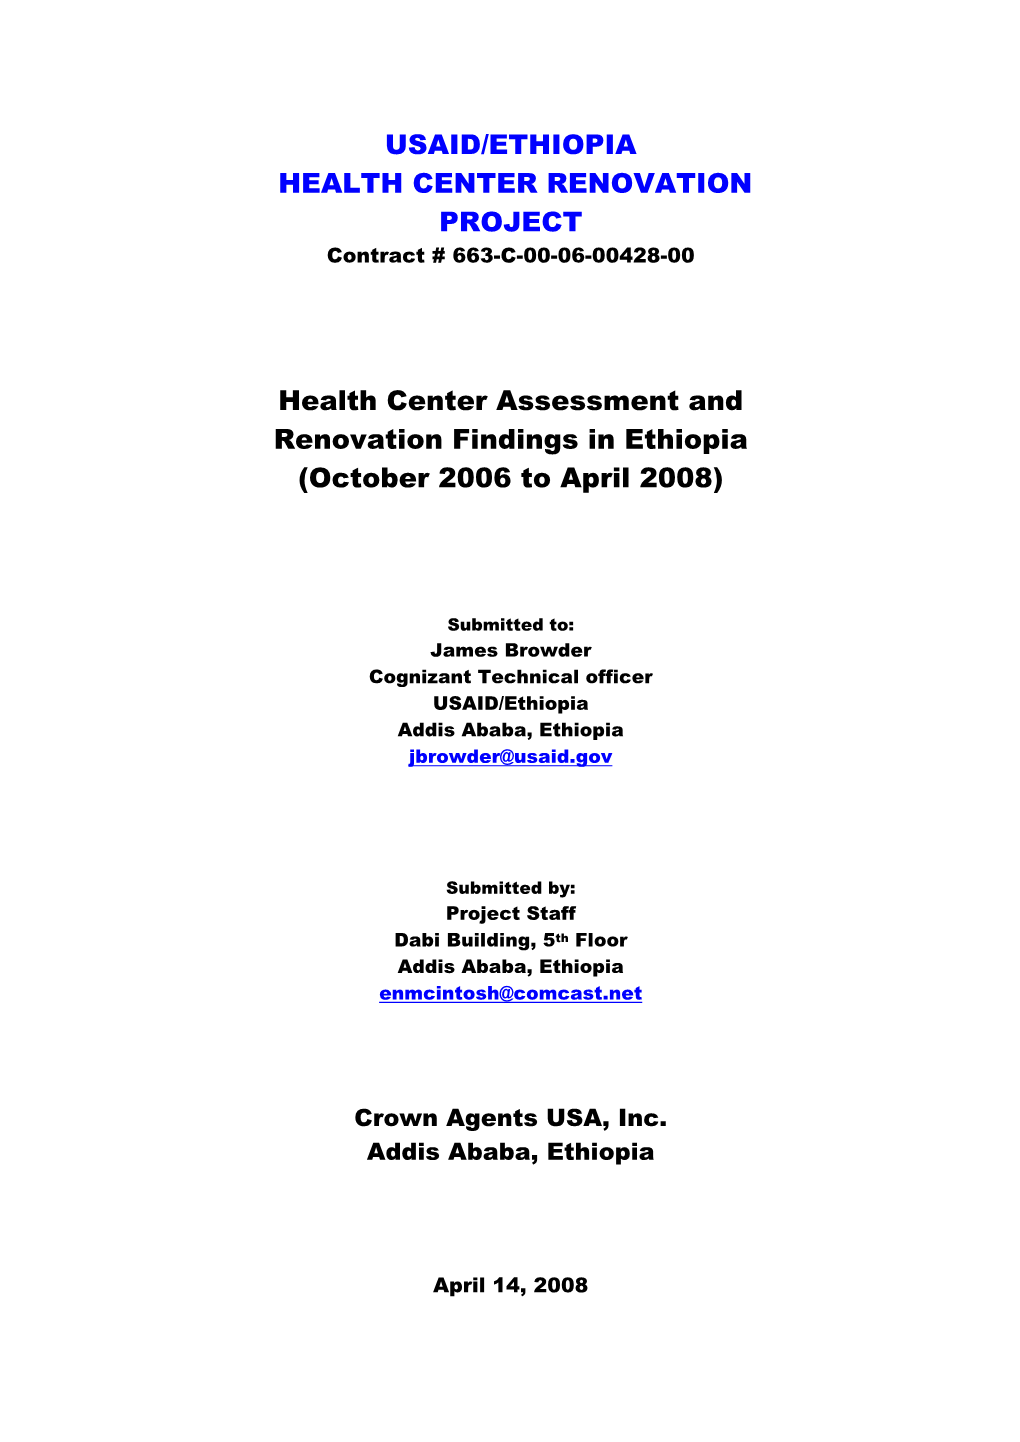 USAID/ETHIOPIA HEALTH CENTER RENOVATION PROJECT Health Center Assessment and Renovation Findings in Ethiopia (October 2006 To